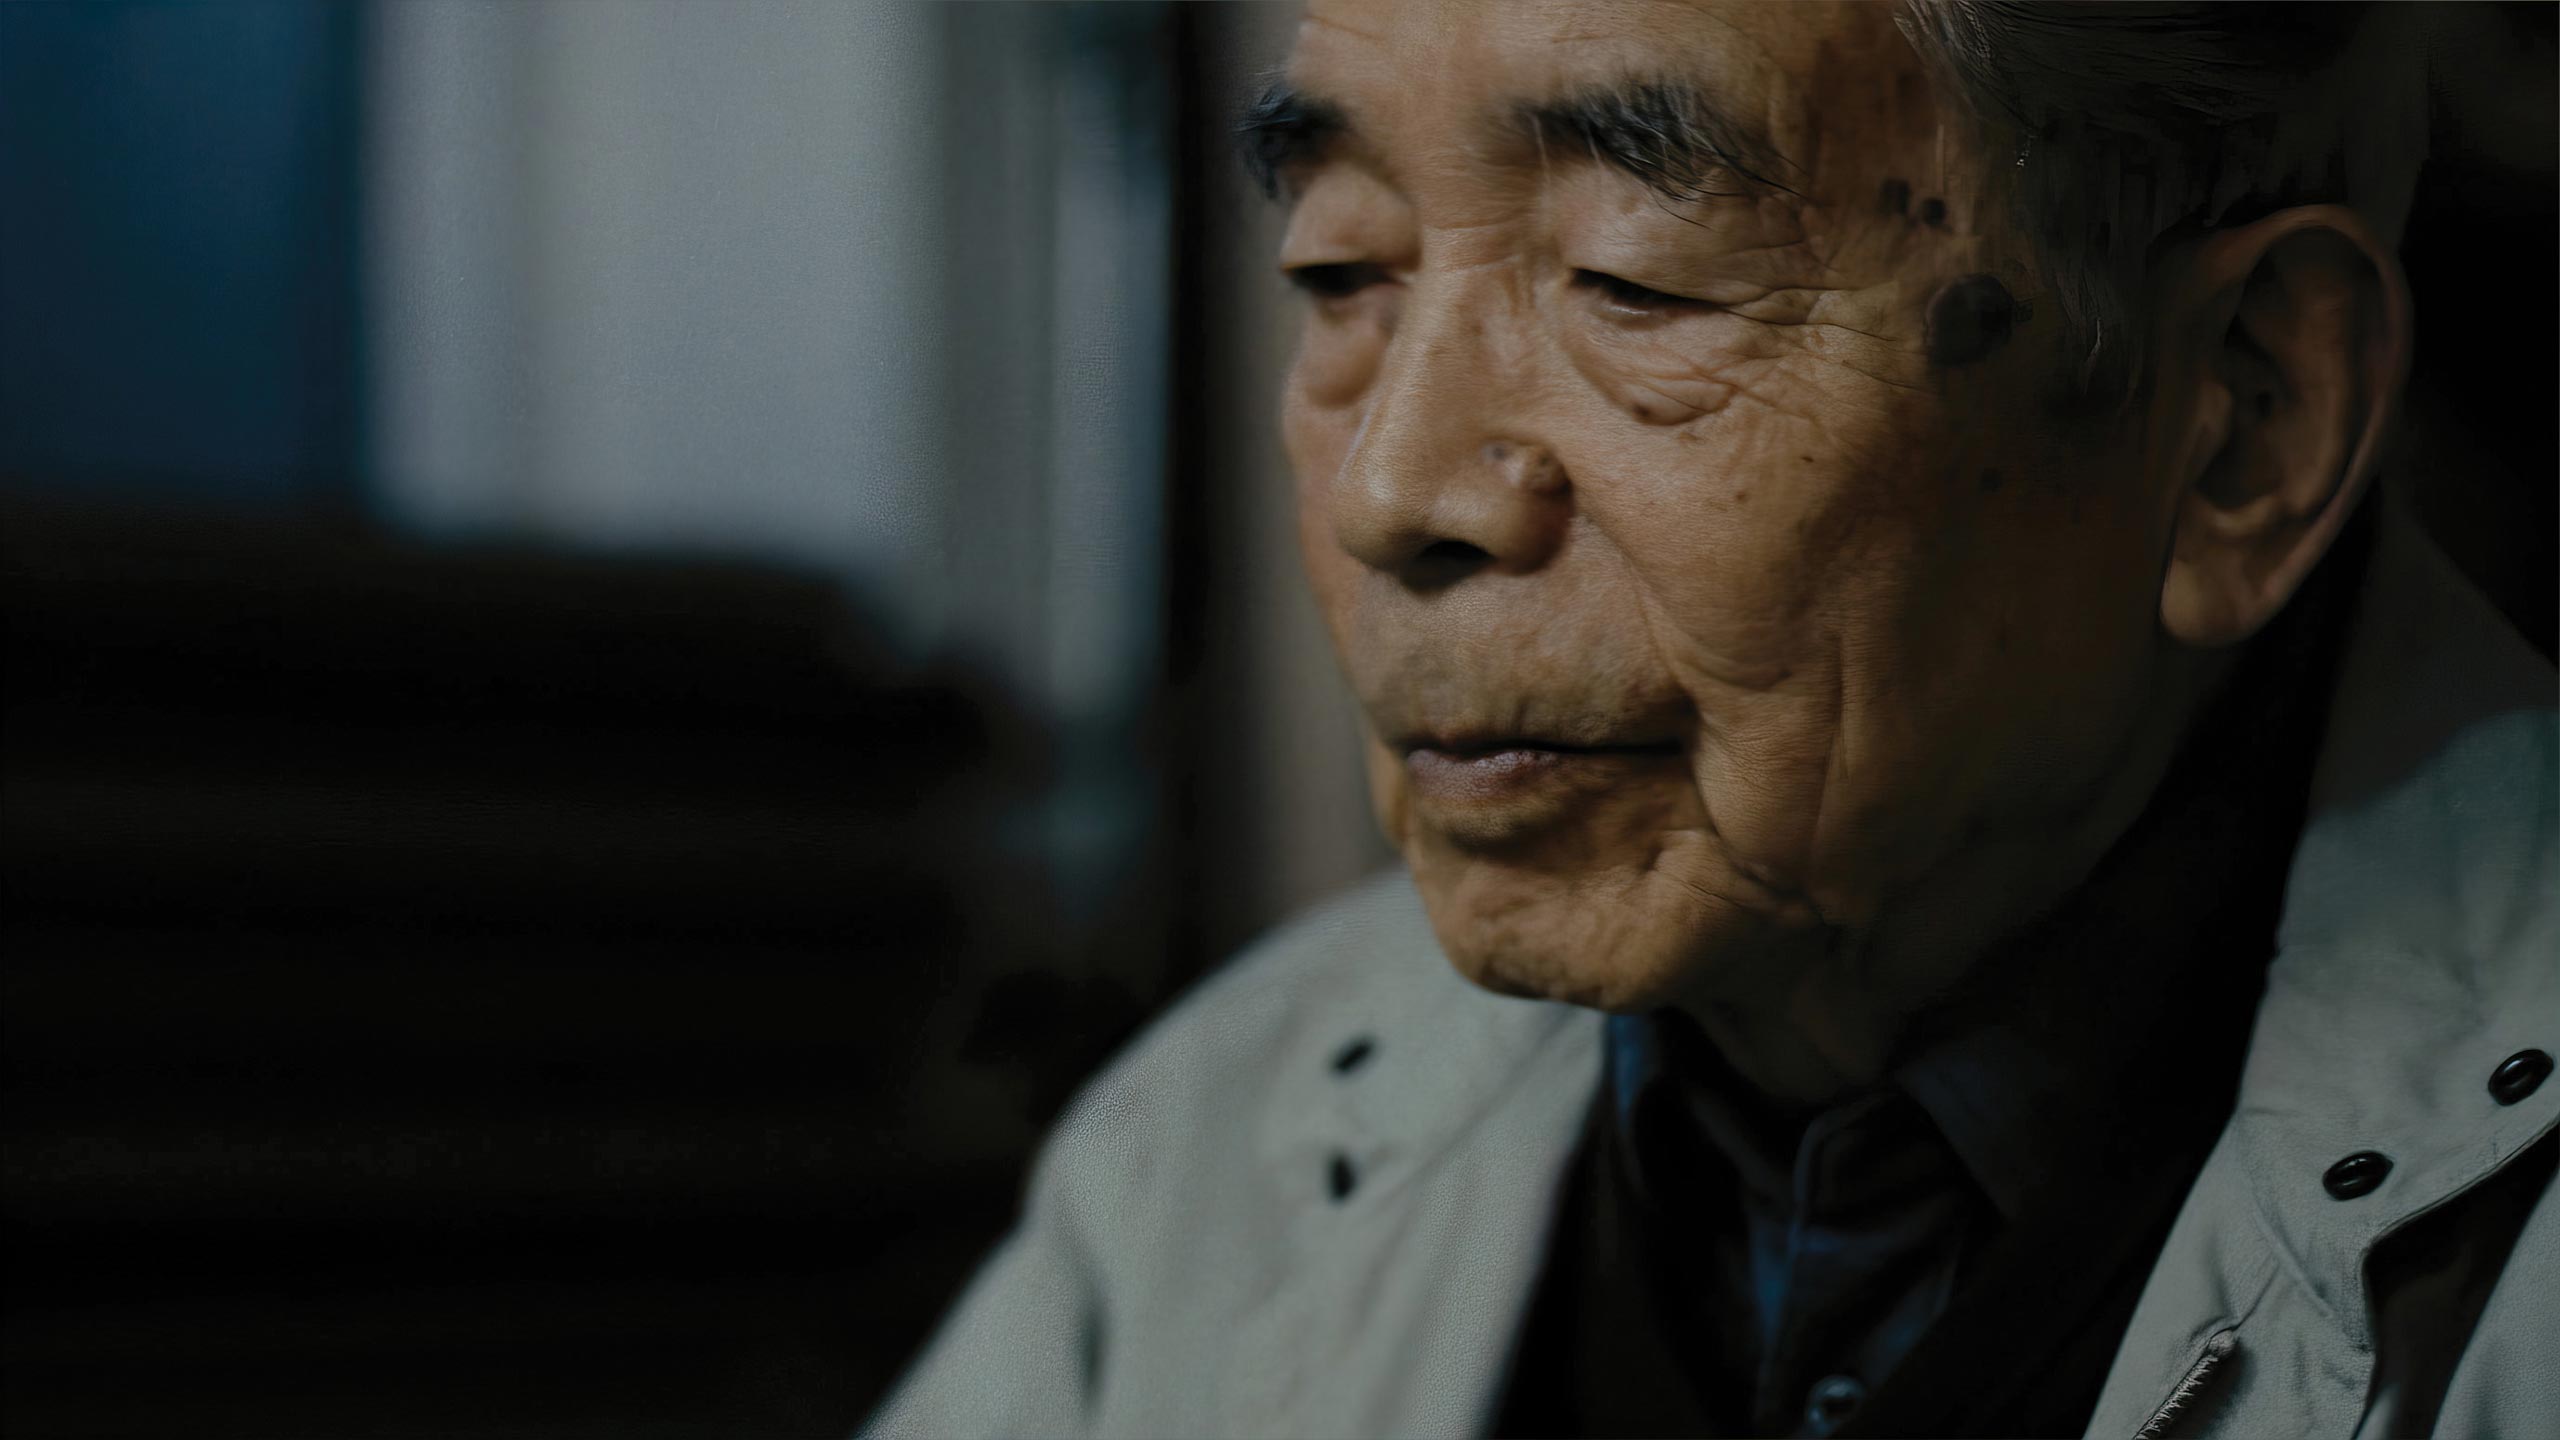 Minoru Tsukiyama 'We mustn't go to war again.'